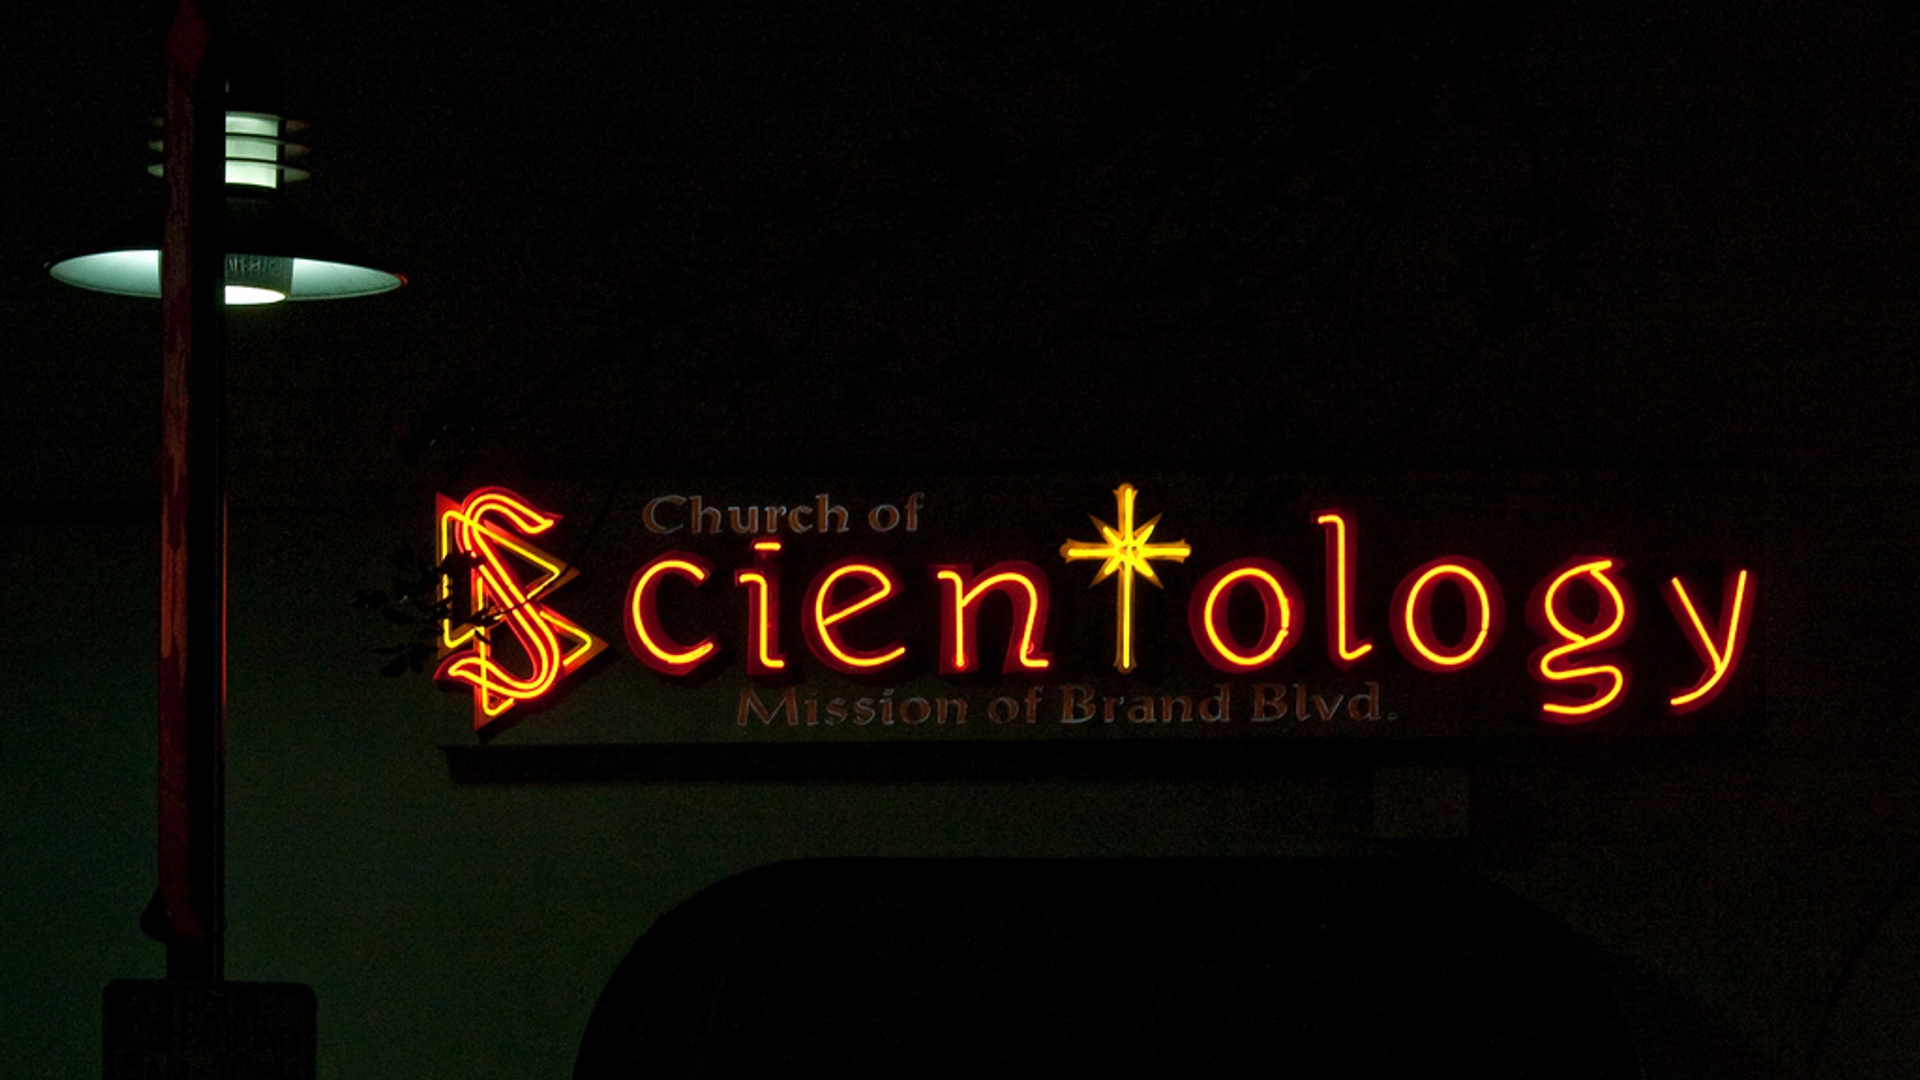 Church of Scientology222 N Brand Blvd Glendale, CA